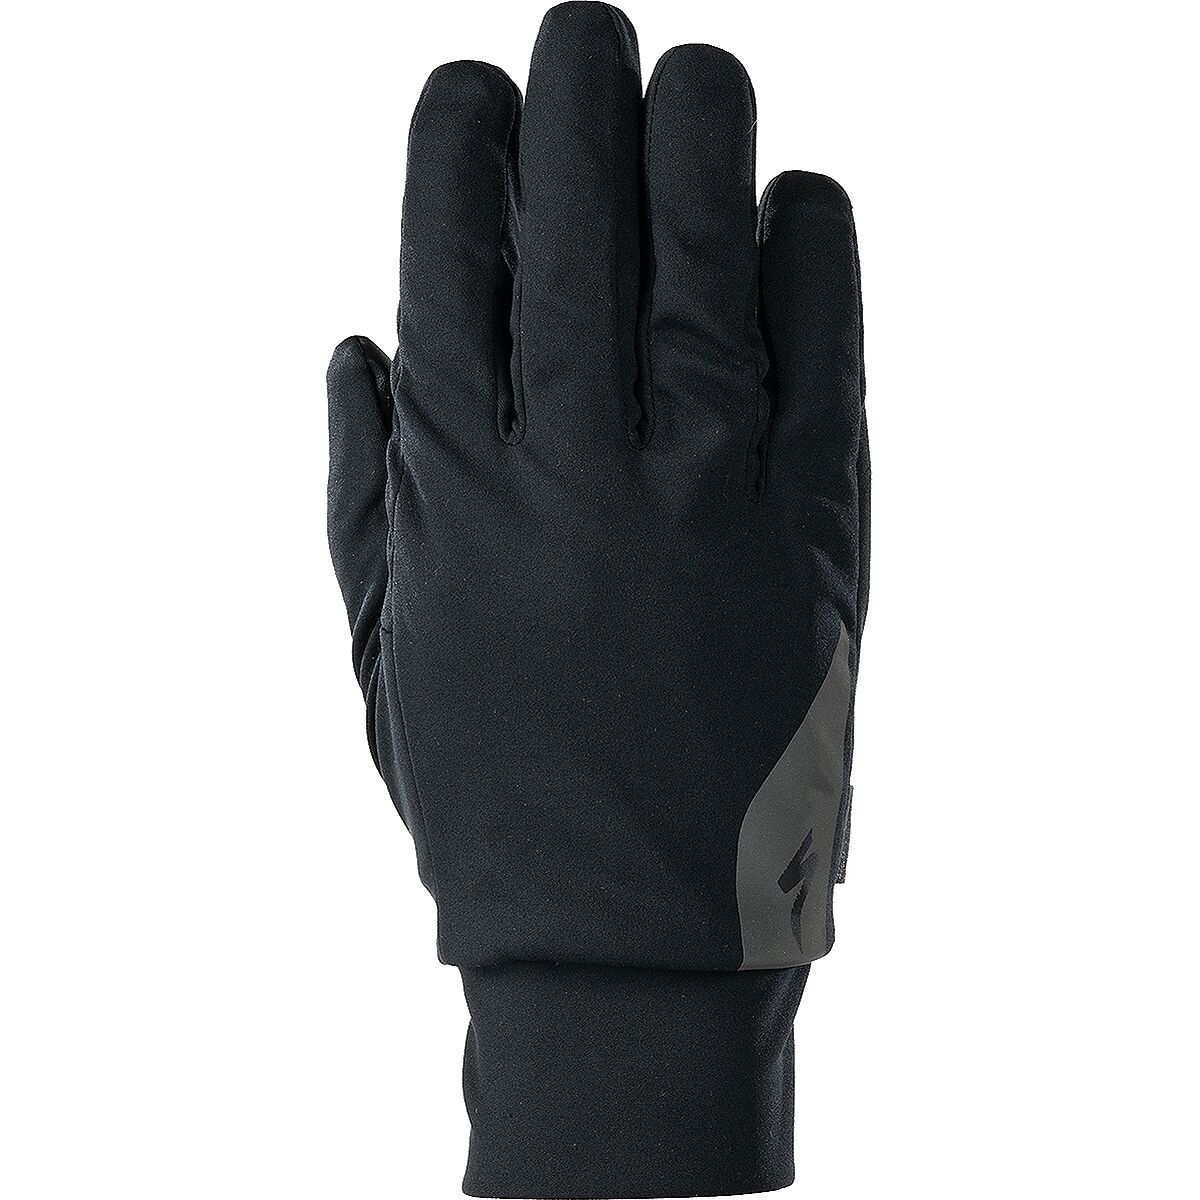 Specialized Prime-Series Waterproof Glove - Men's